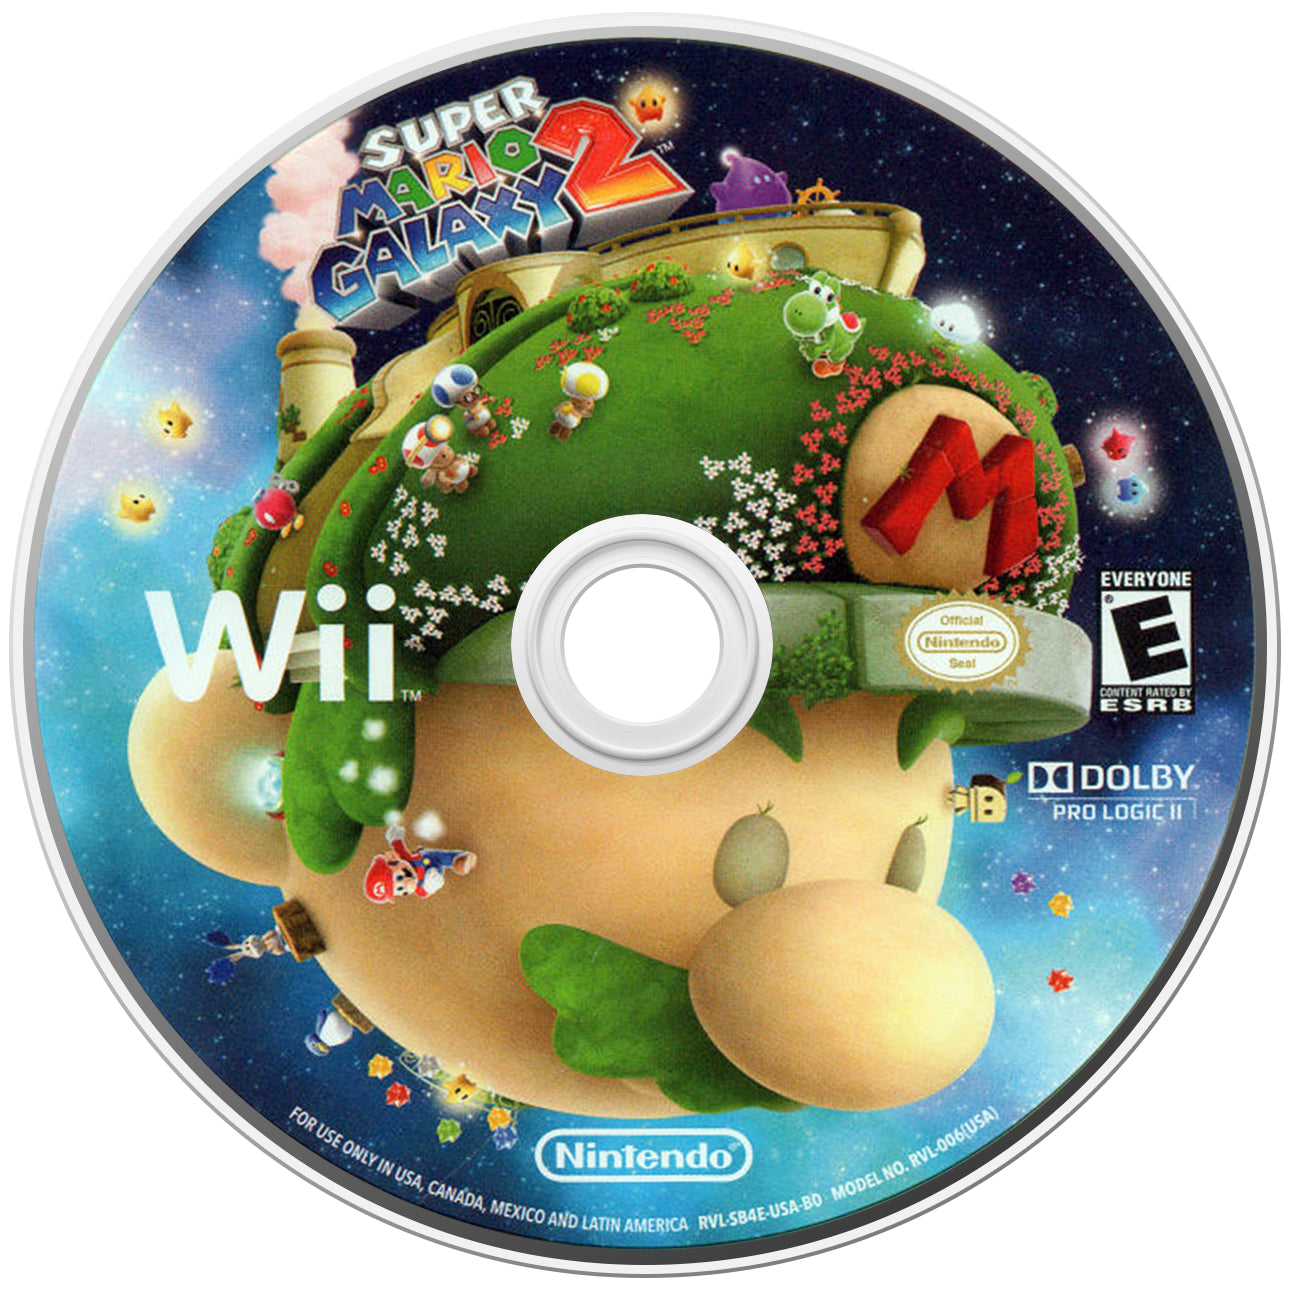 Super Mario Galaxy 2 - Wii Game